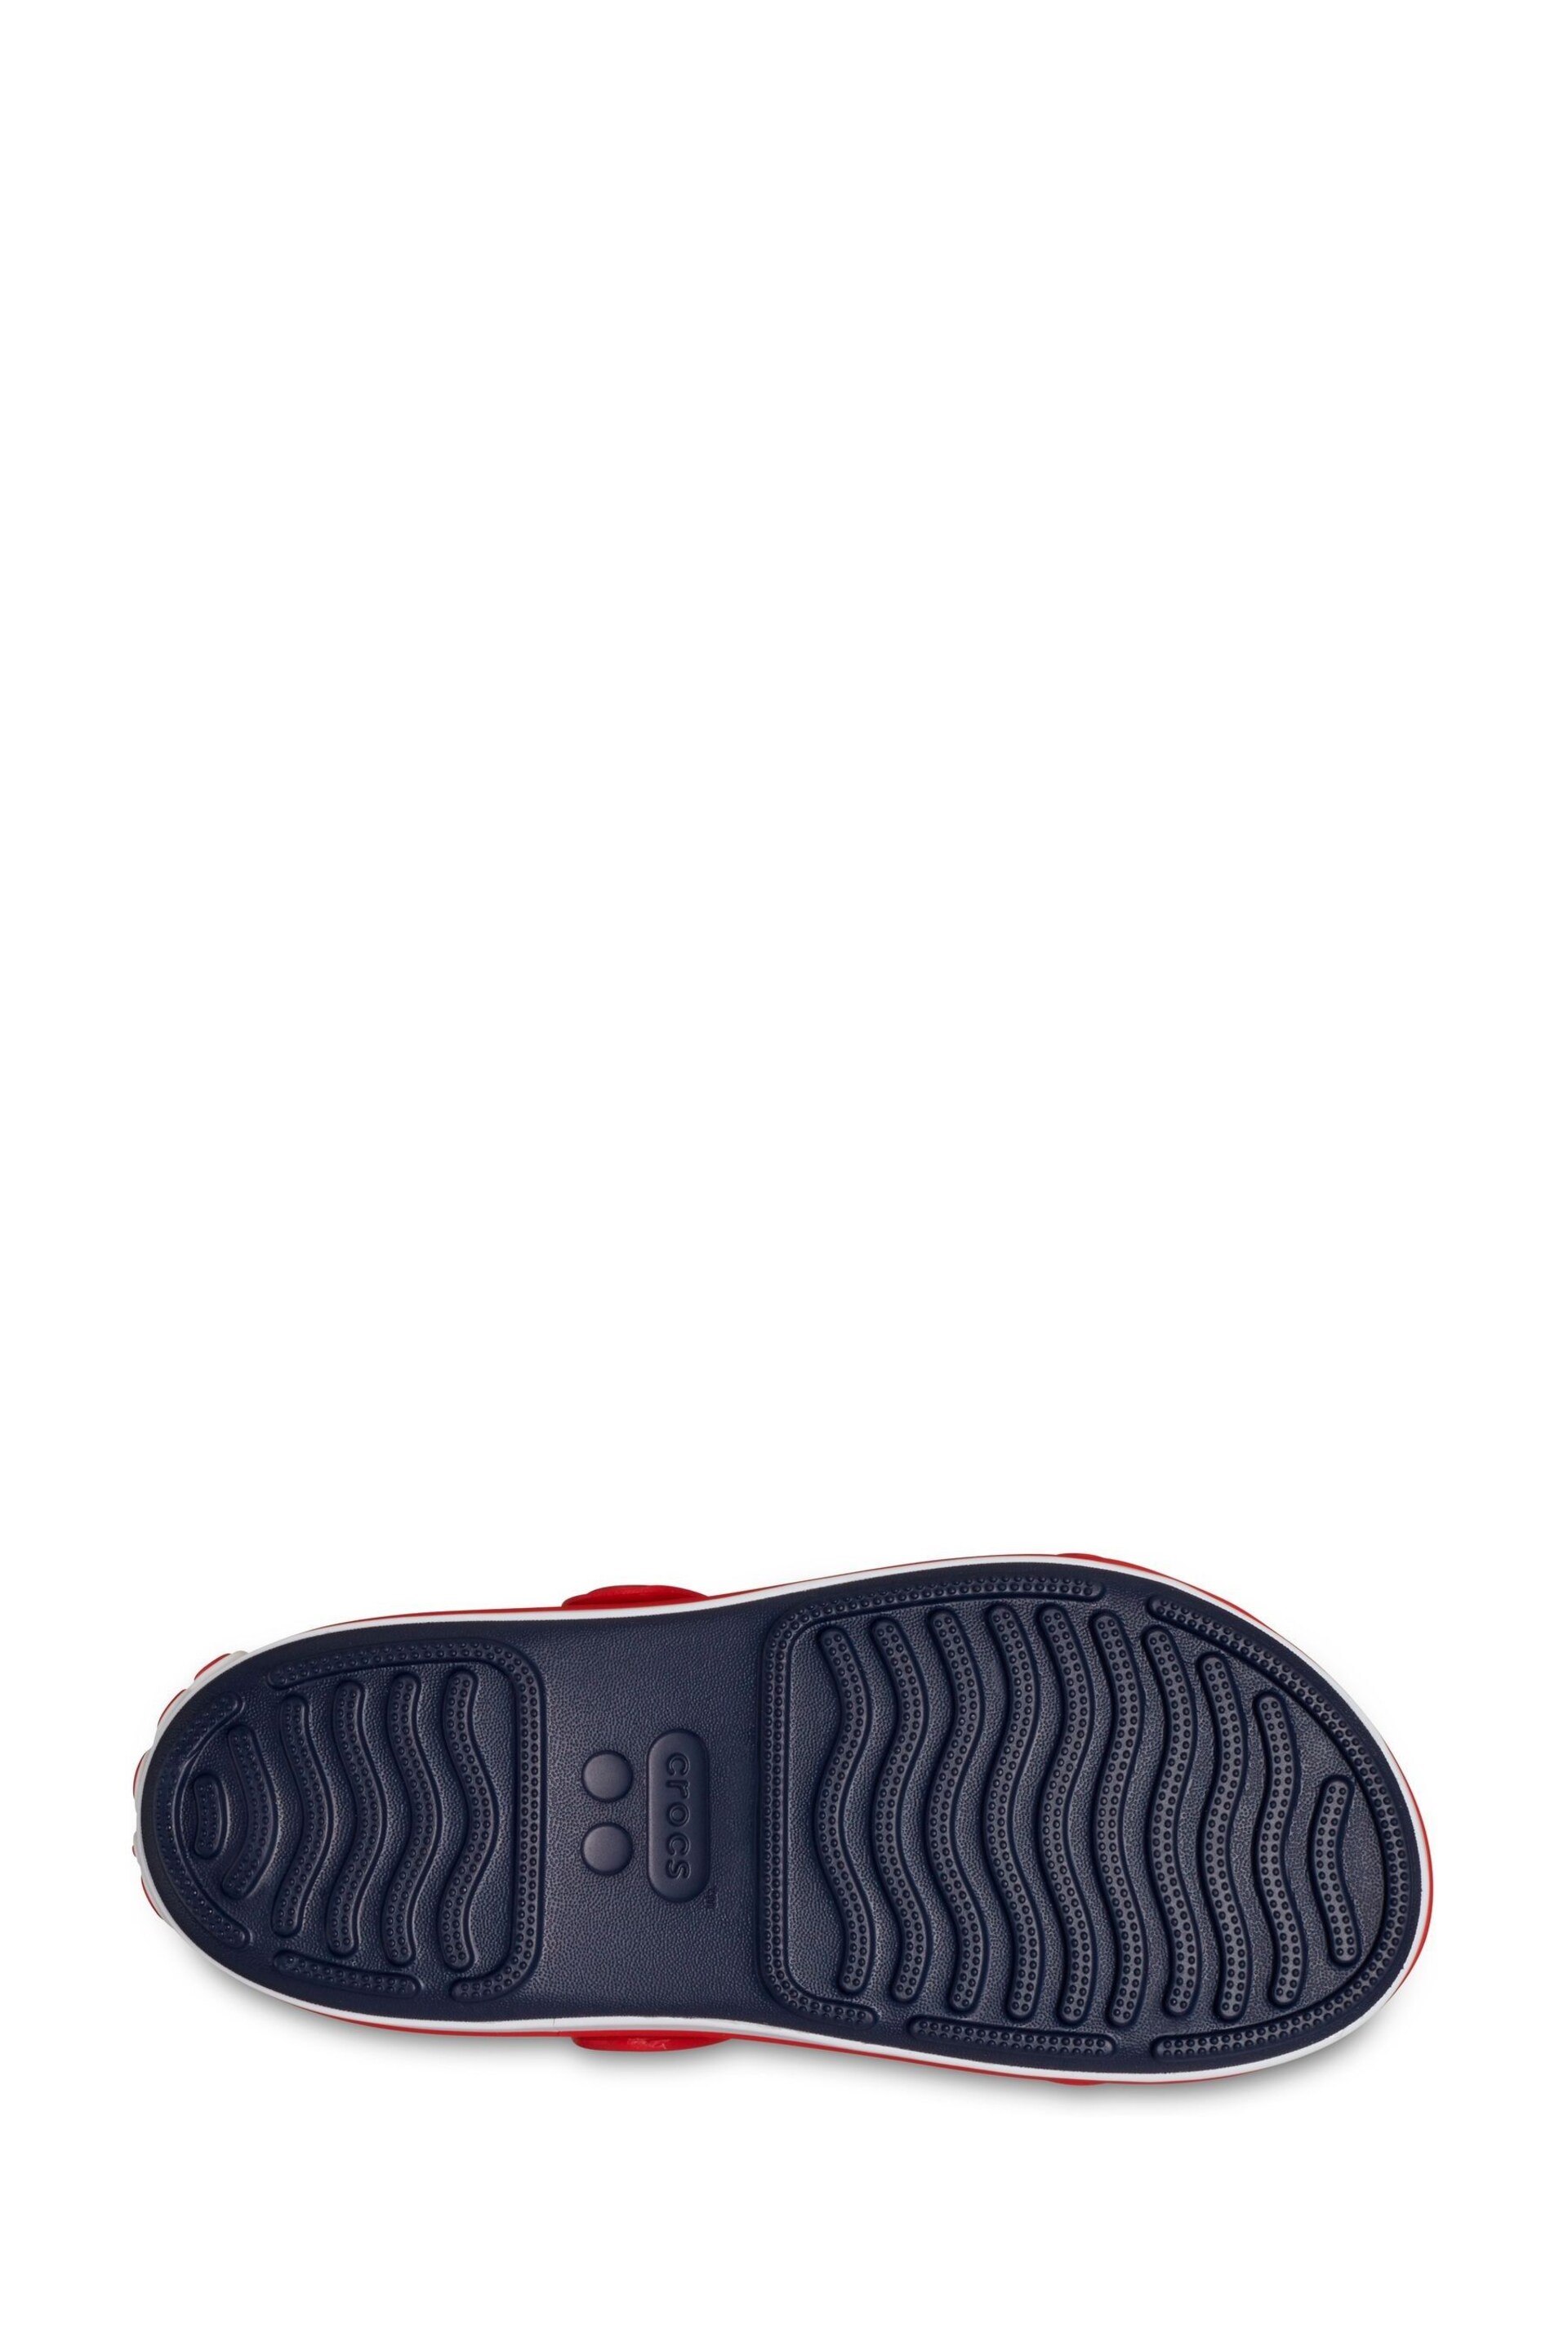 Crocs Kids Crocband Cruiser Sandals - Image 7 of 7